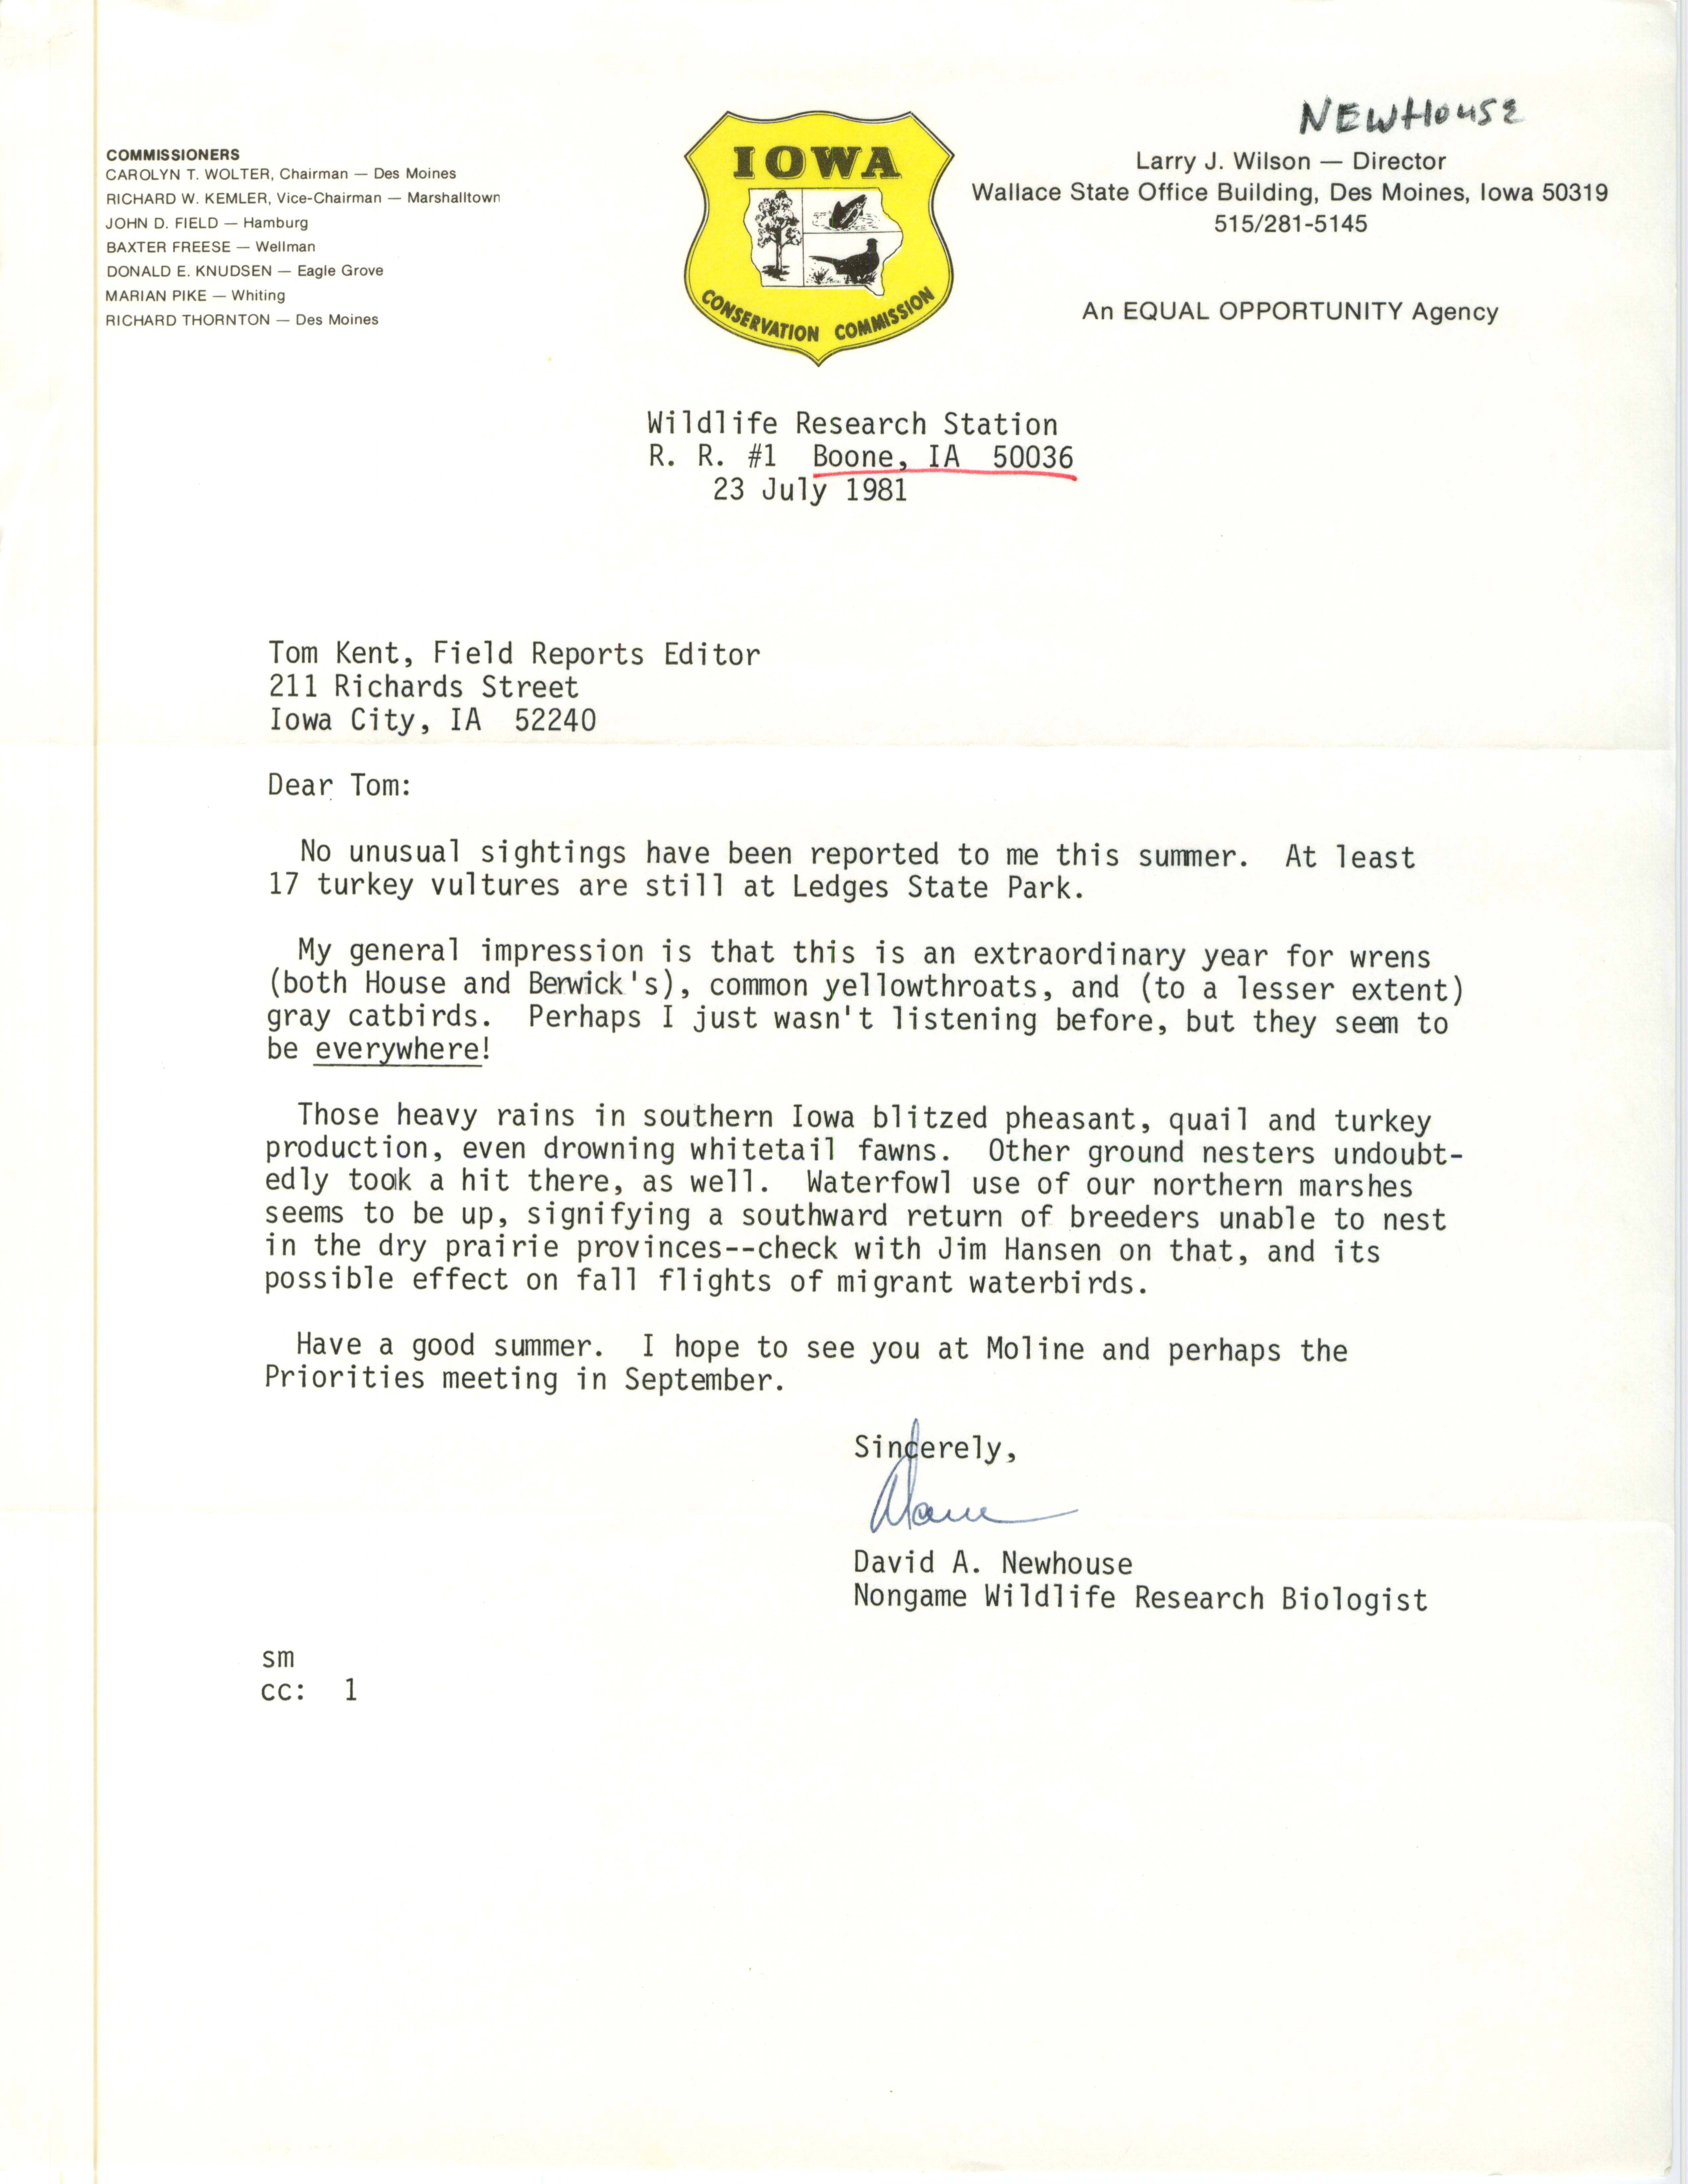 David A. Newhouse letter to Thomas H. Kent regarding summer bird sightings, July 25, 1981